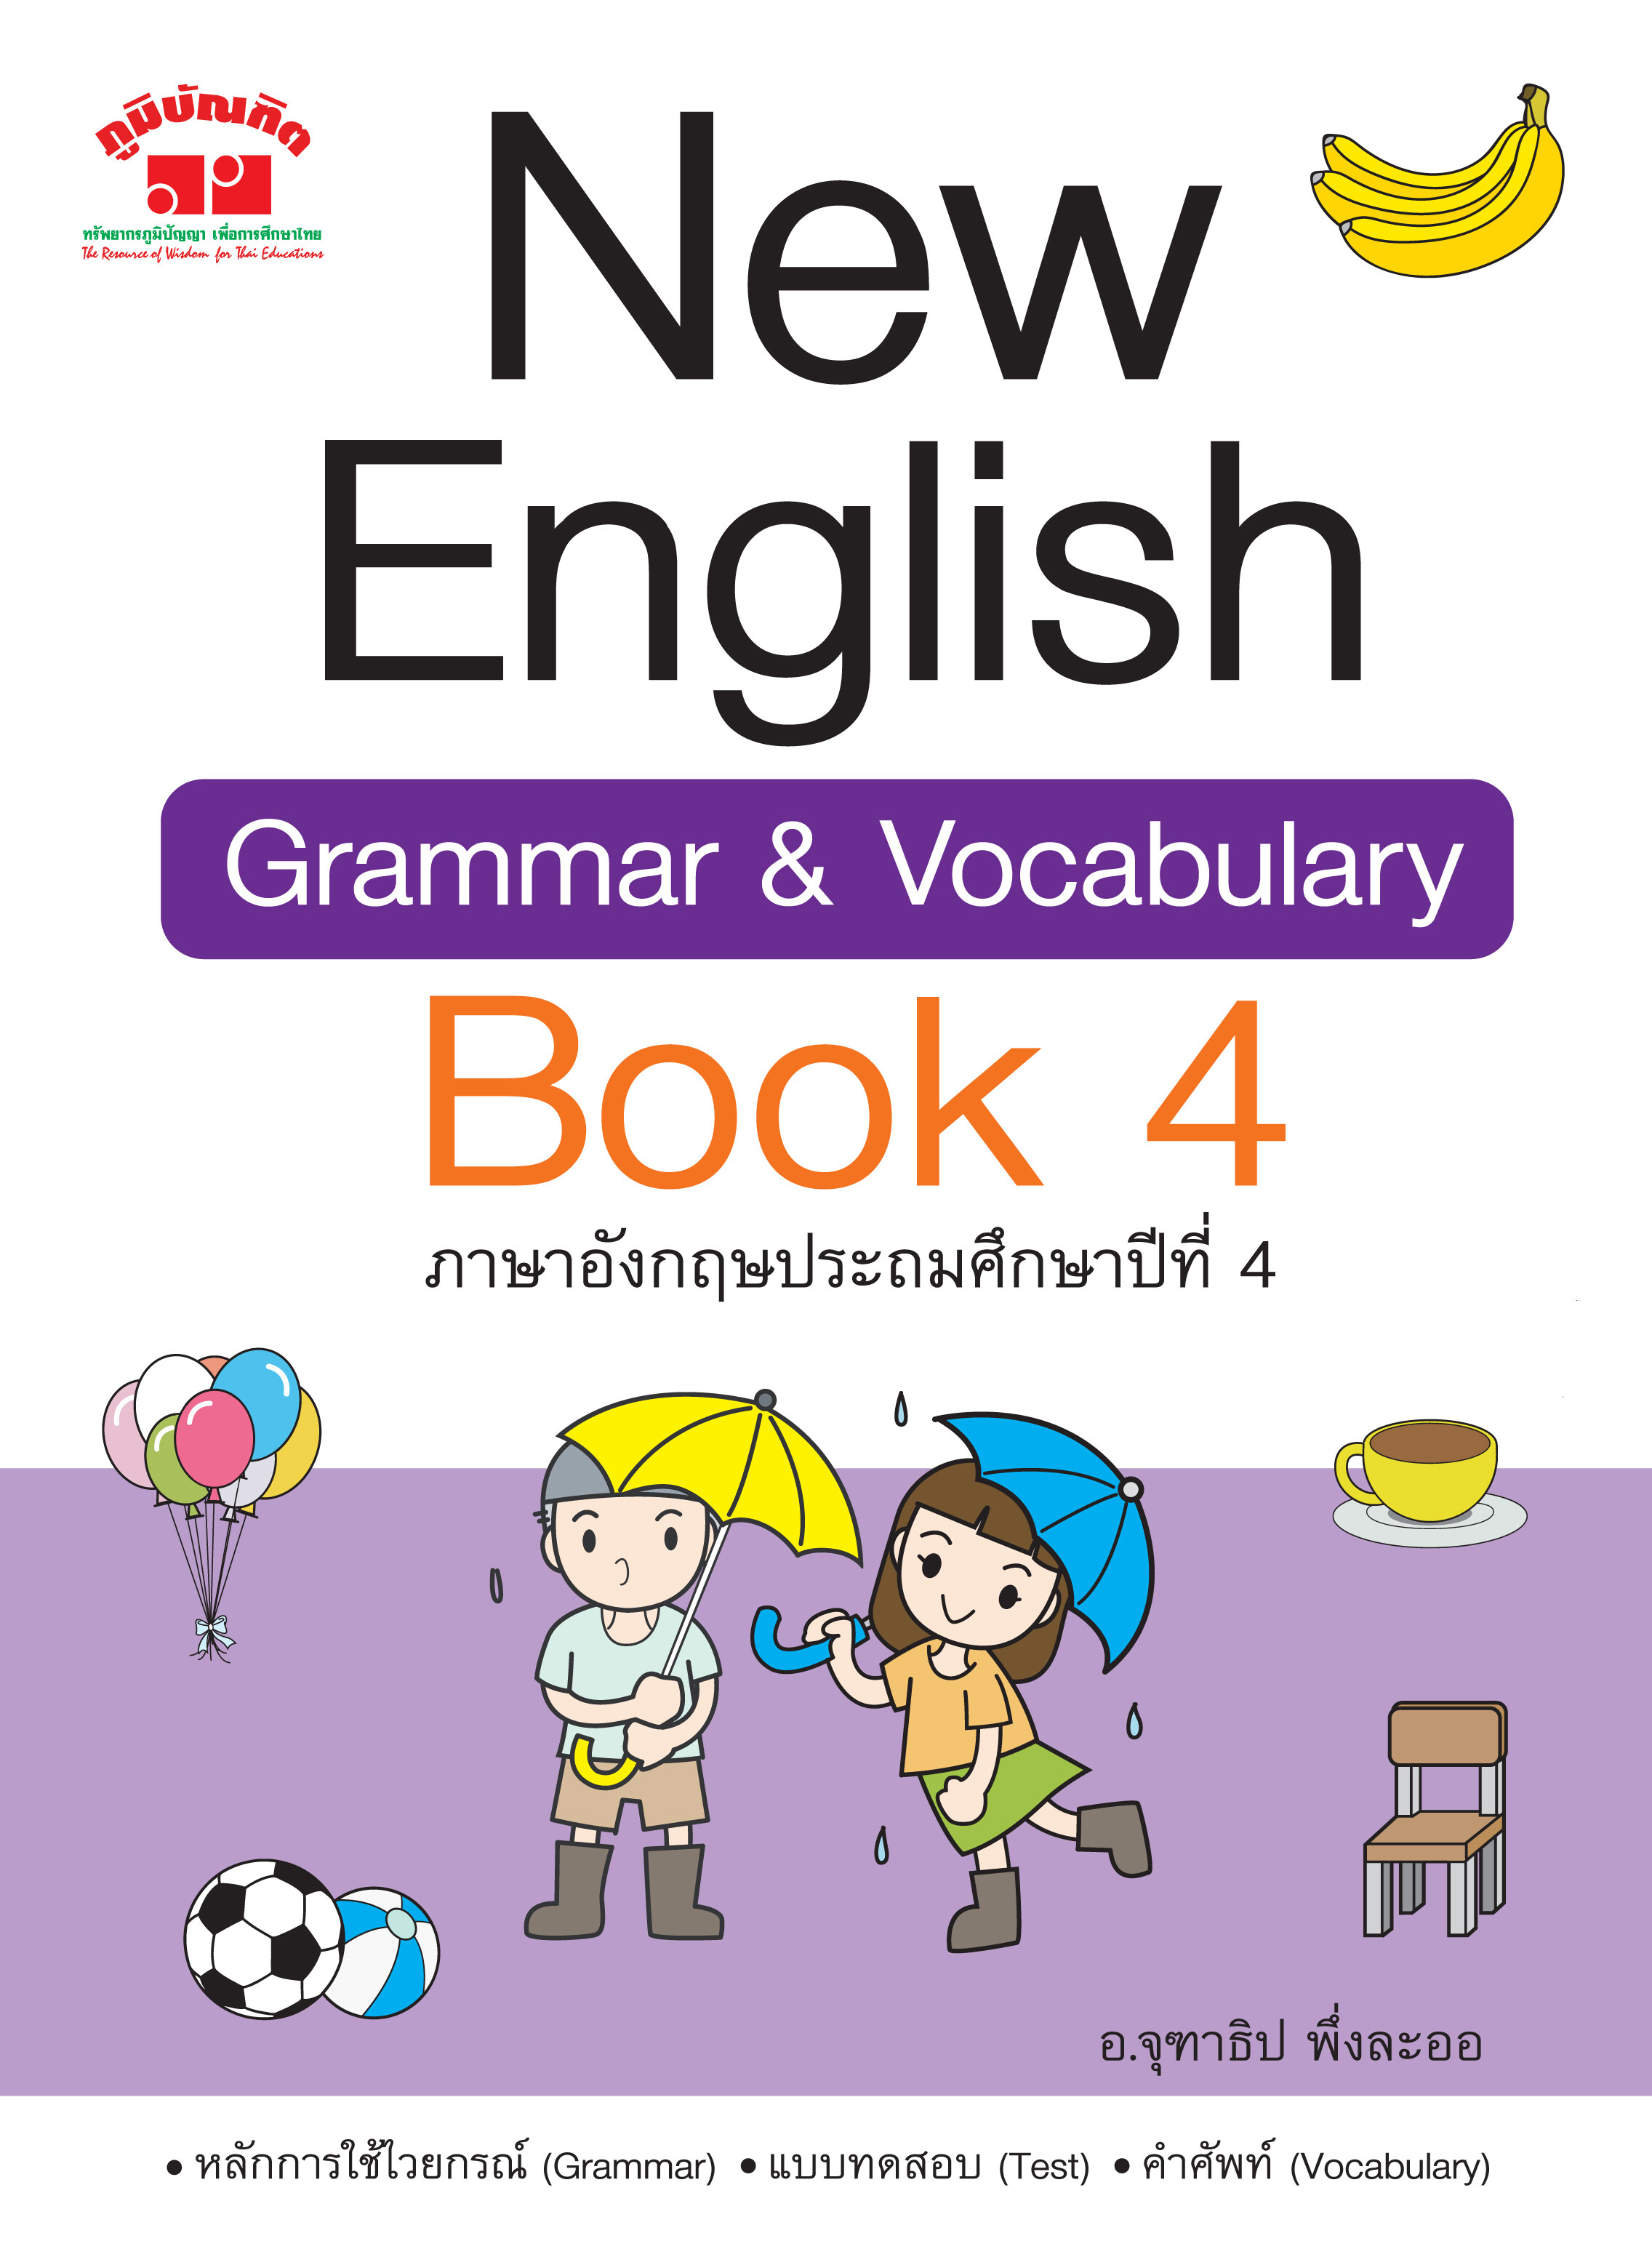 New English Grammar & Vocabulary Book 4 - Poombundit(ภูมิบัณฑิต)